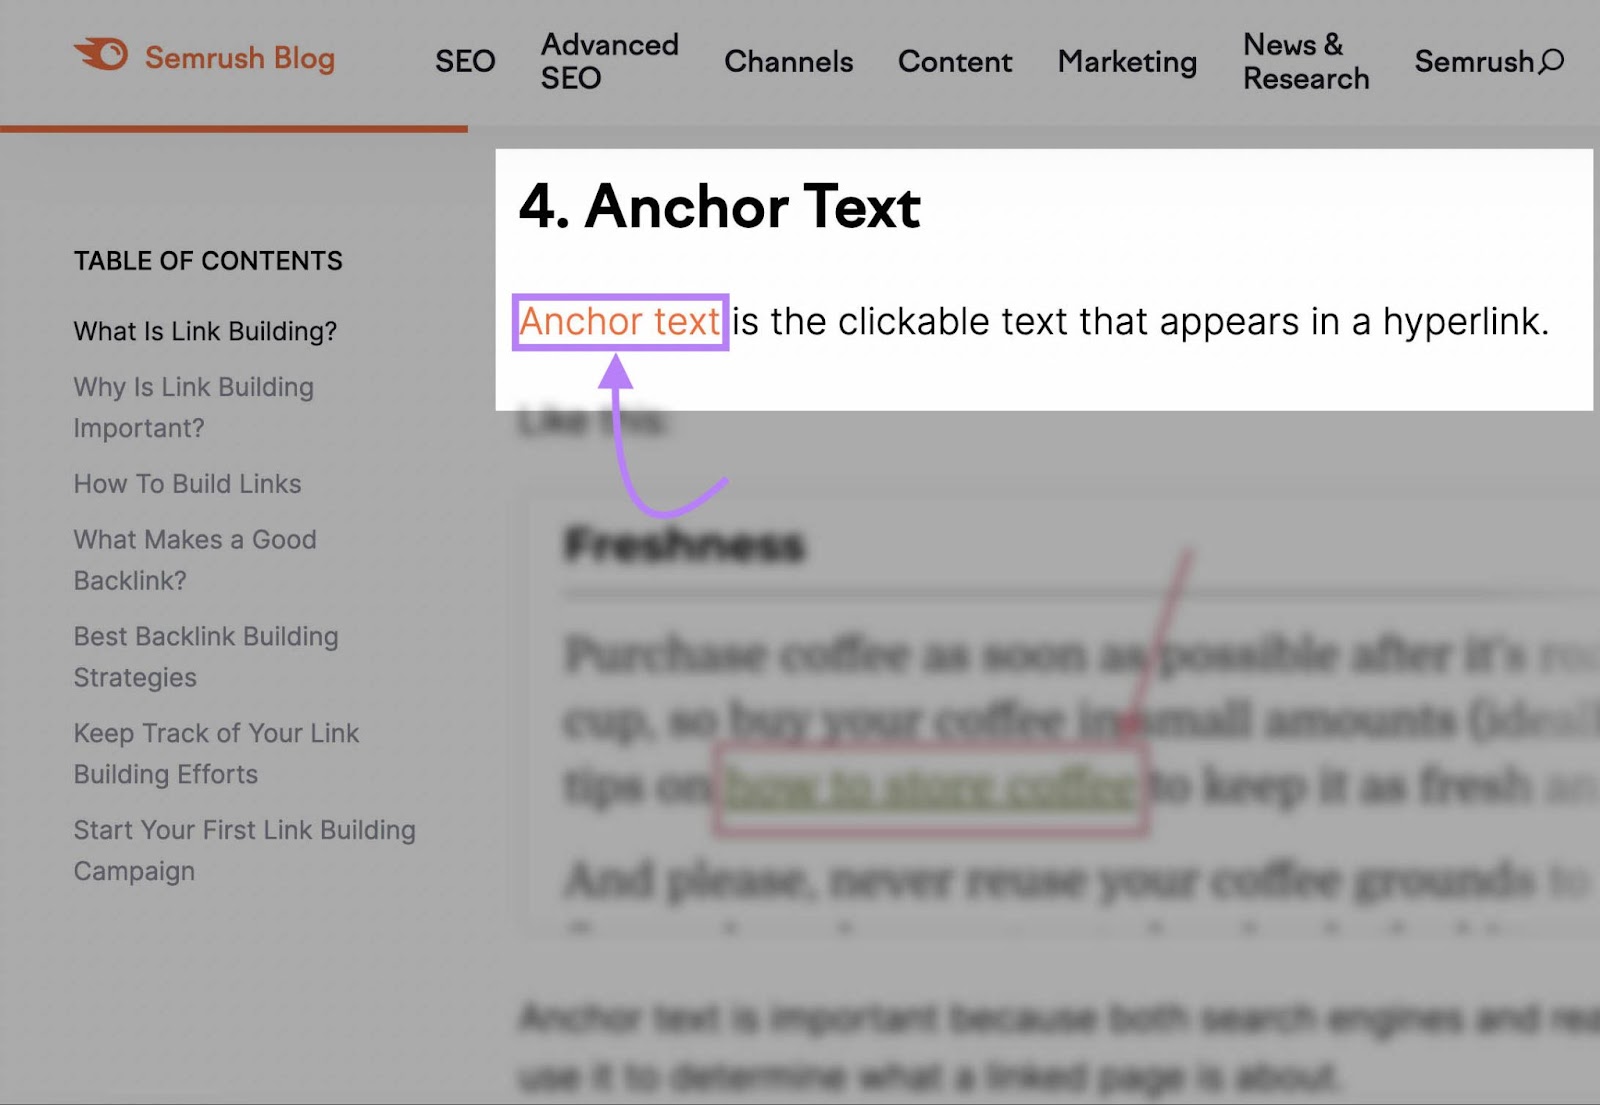 An internal link with "Anchor text" as an anchor text in Semrush's blog